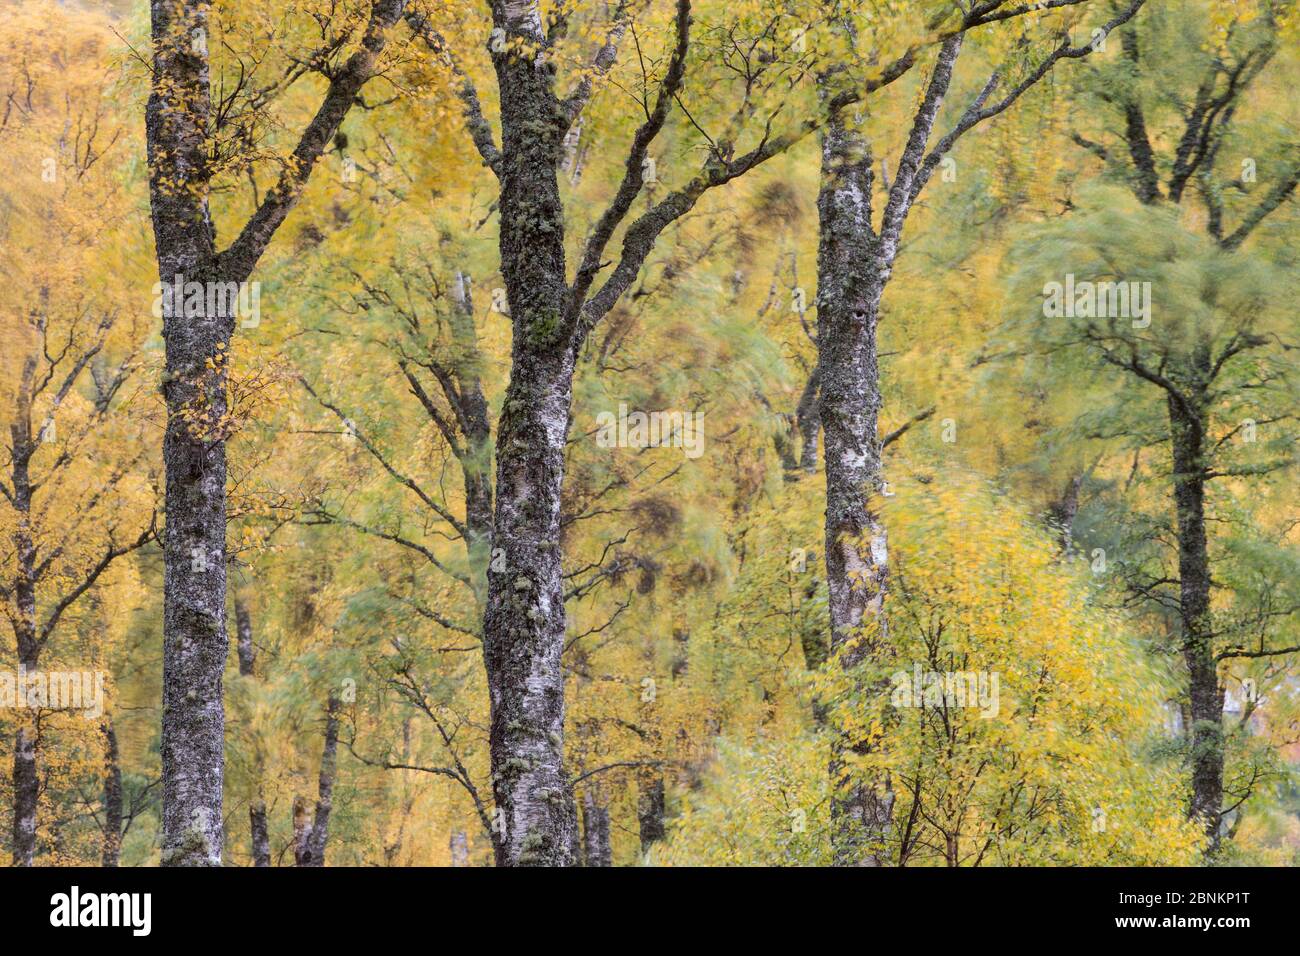 Silver birch (Betula pendula) trees, Craigellachie National Nature Reserve, Cairngorms National Park, Scotland, UK, October. Stock Photo